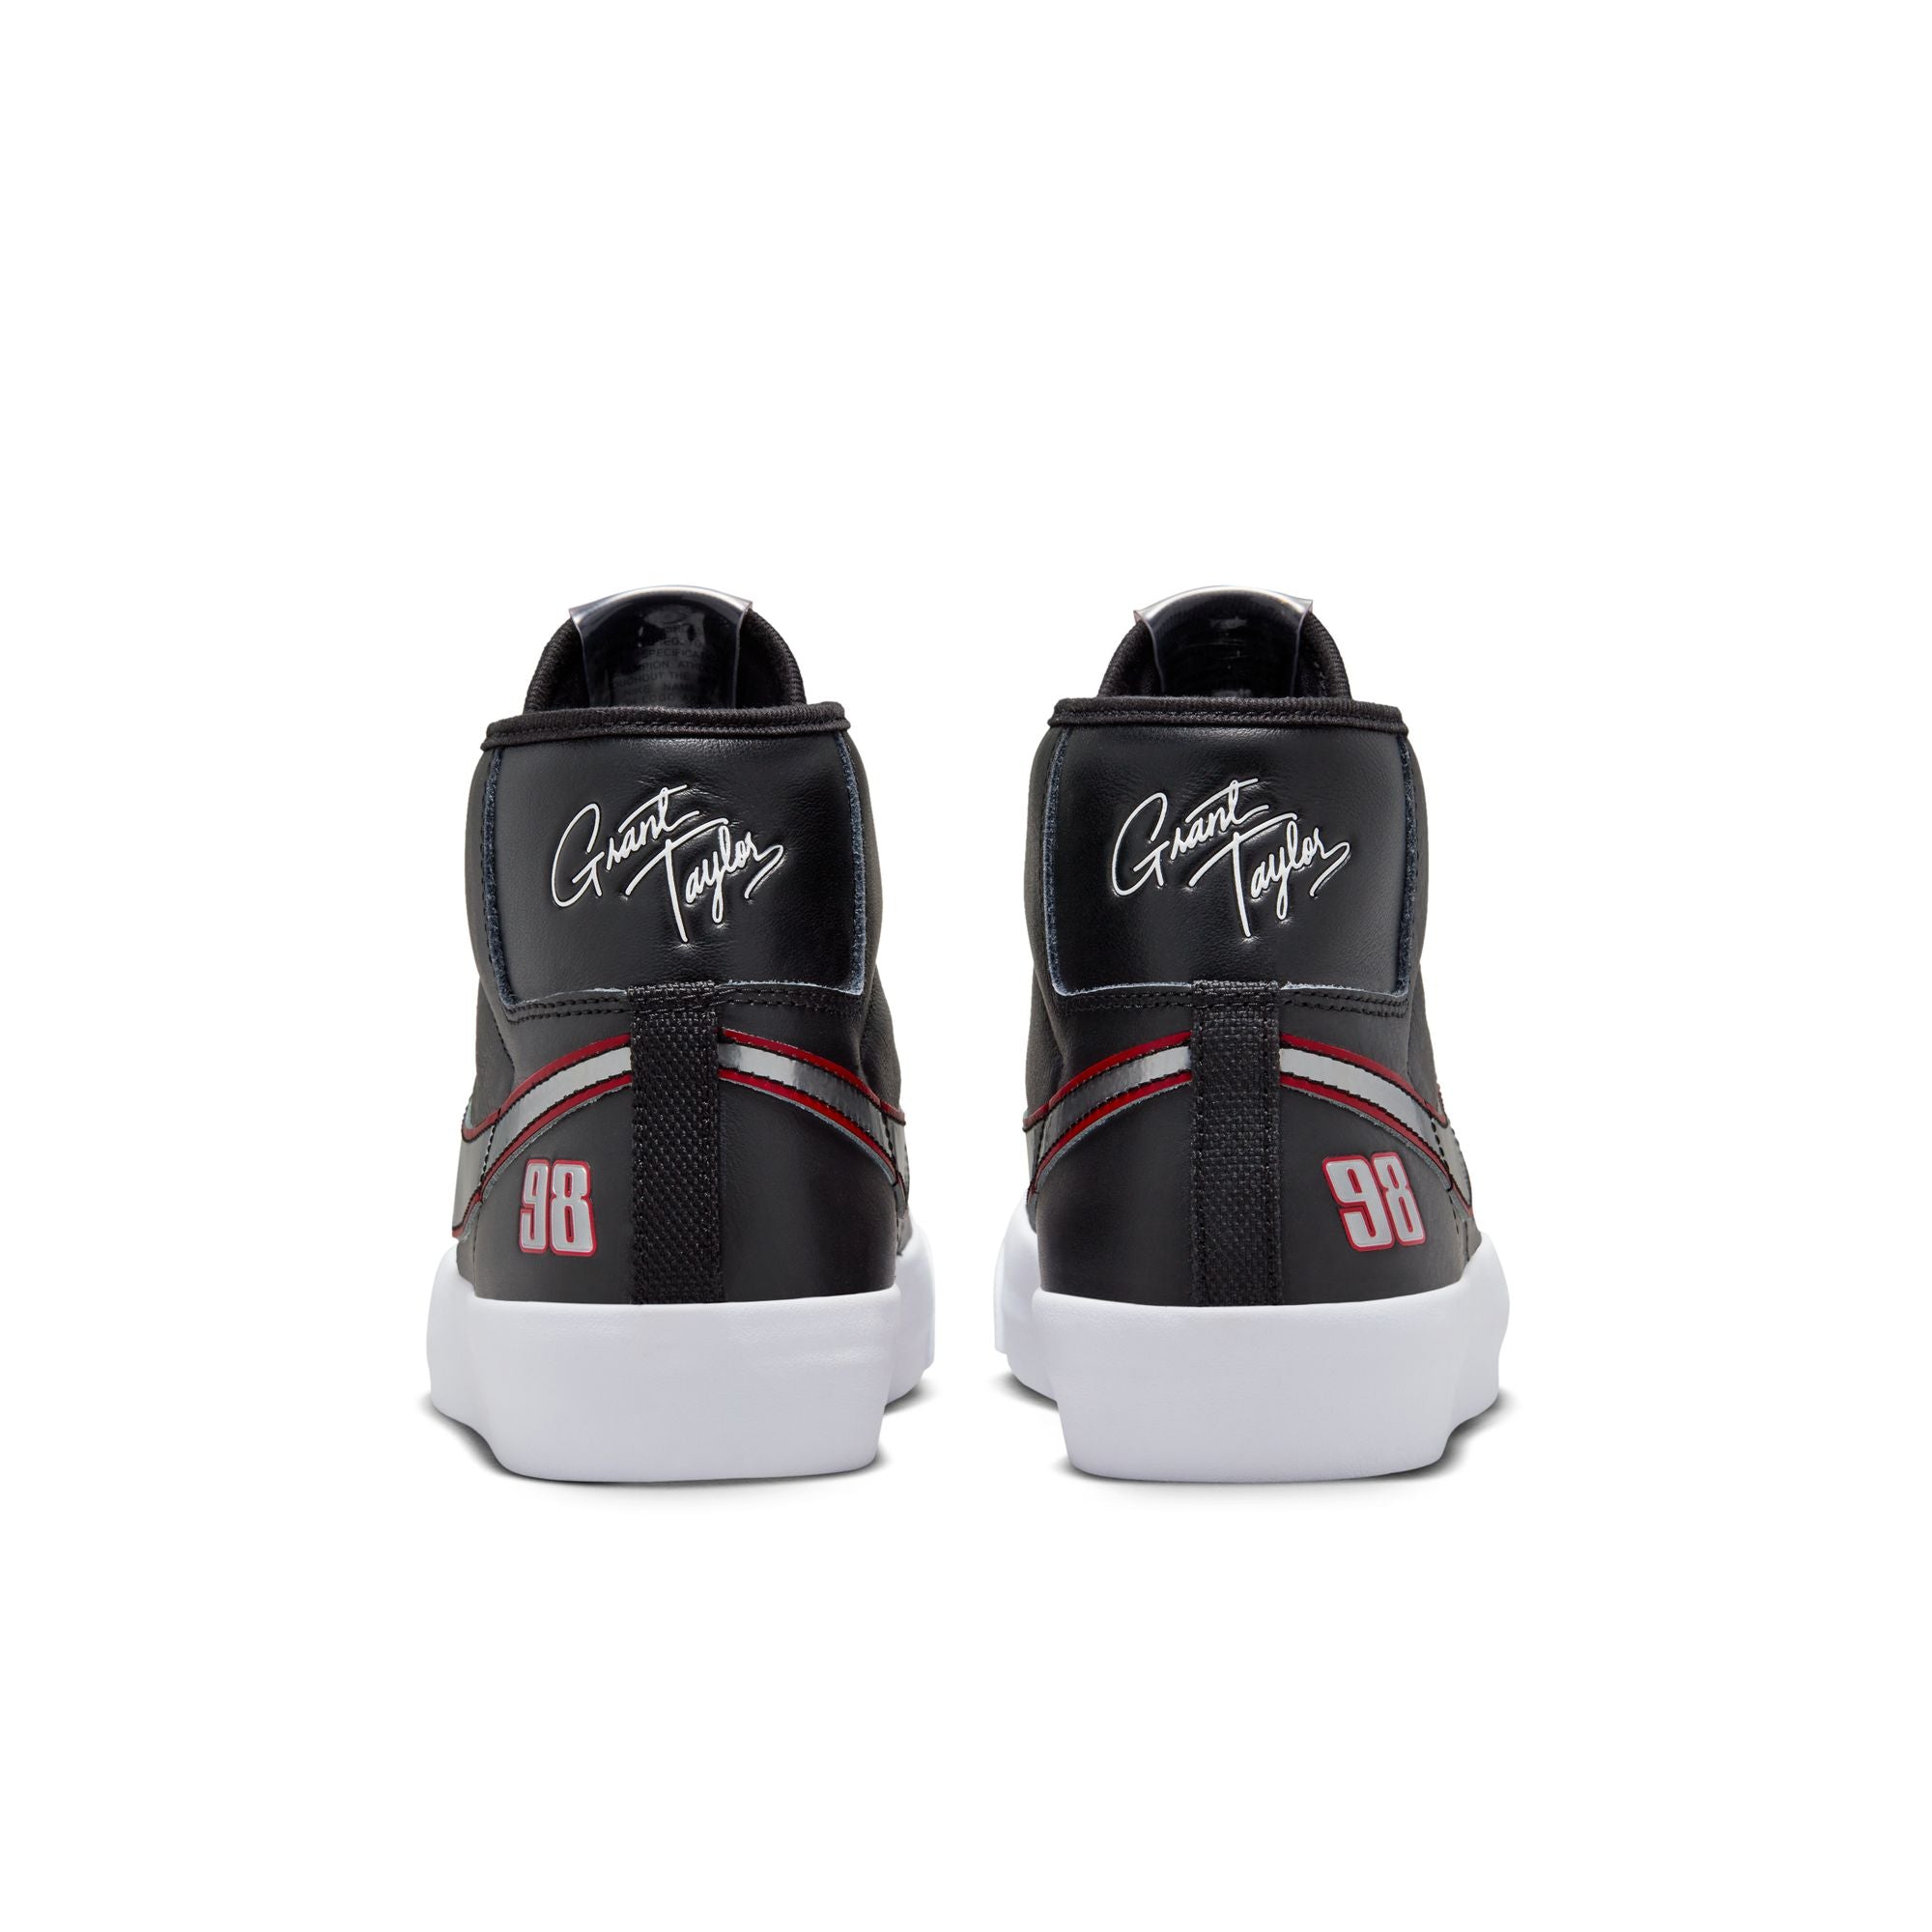 Nike SB Blazer Mid Pro Shoes - Grant Taylor Black/Metallic Silver-University Red